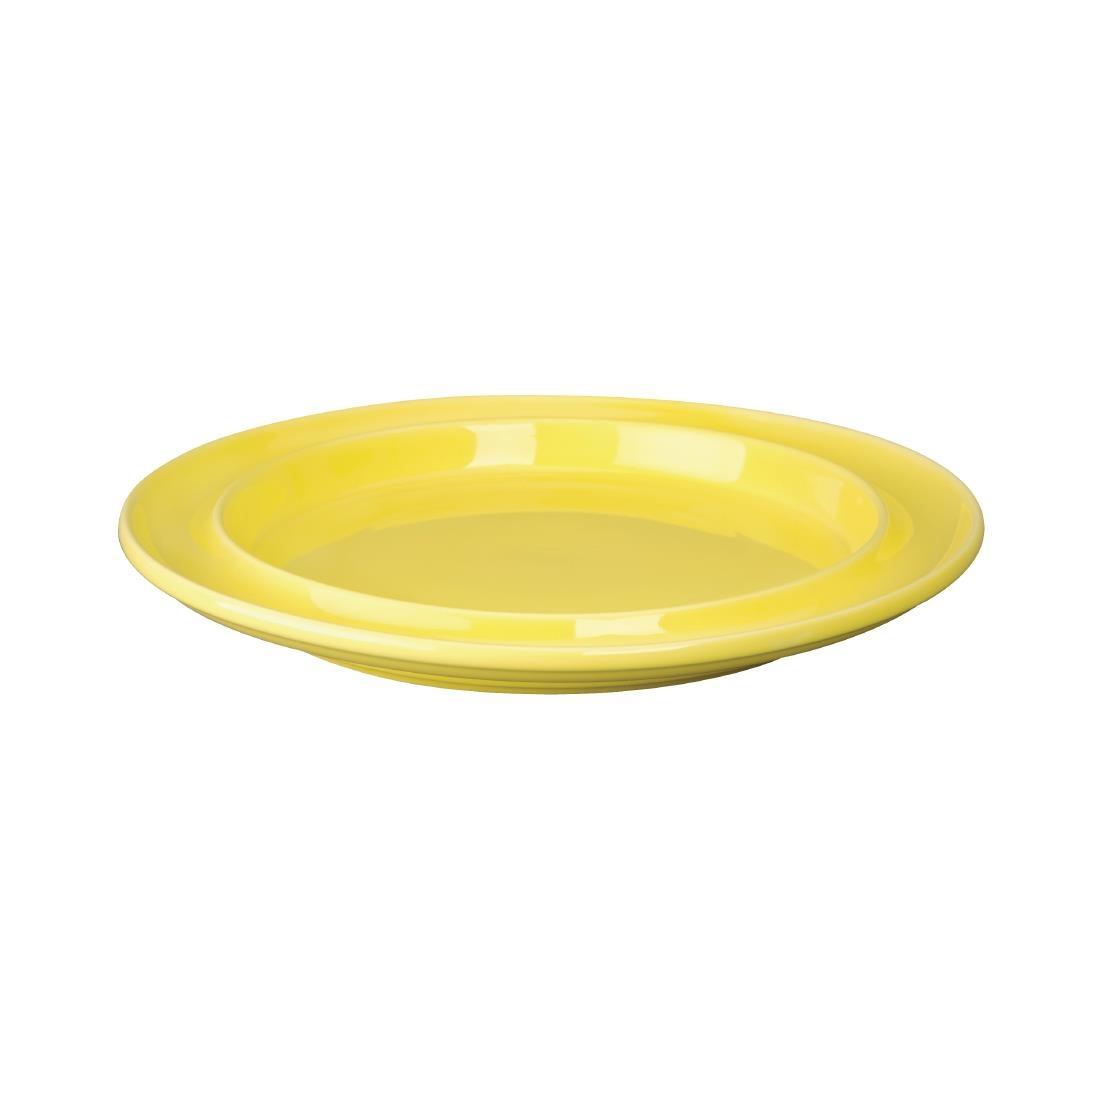 Olympia Kristallon Heritage Raised Rim Plates Yellow 252mm (Pack of 4) - DW707  - 3